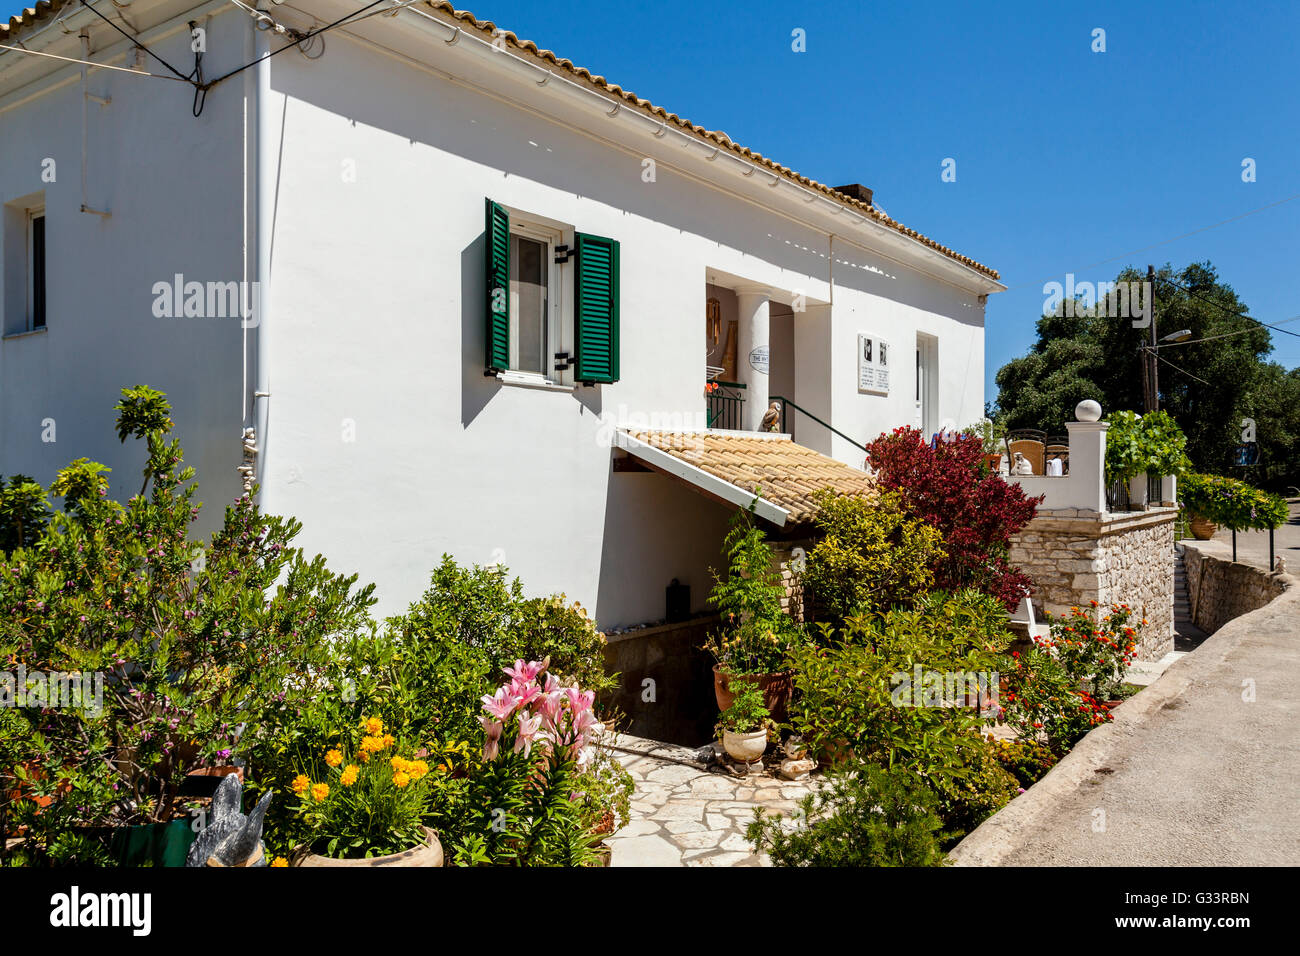 The White House ( Childhood Home of British Authors Gerald & Lawrence Durrell ) Kalami, Corfu Island, Greece. Stock Photo